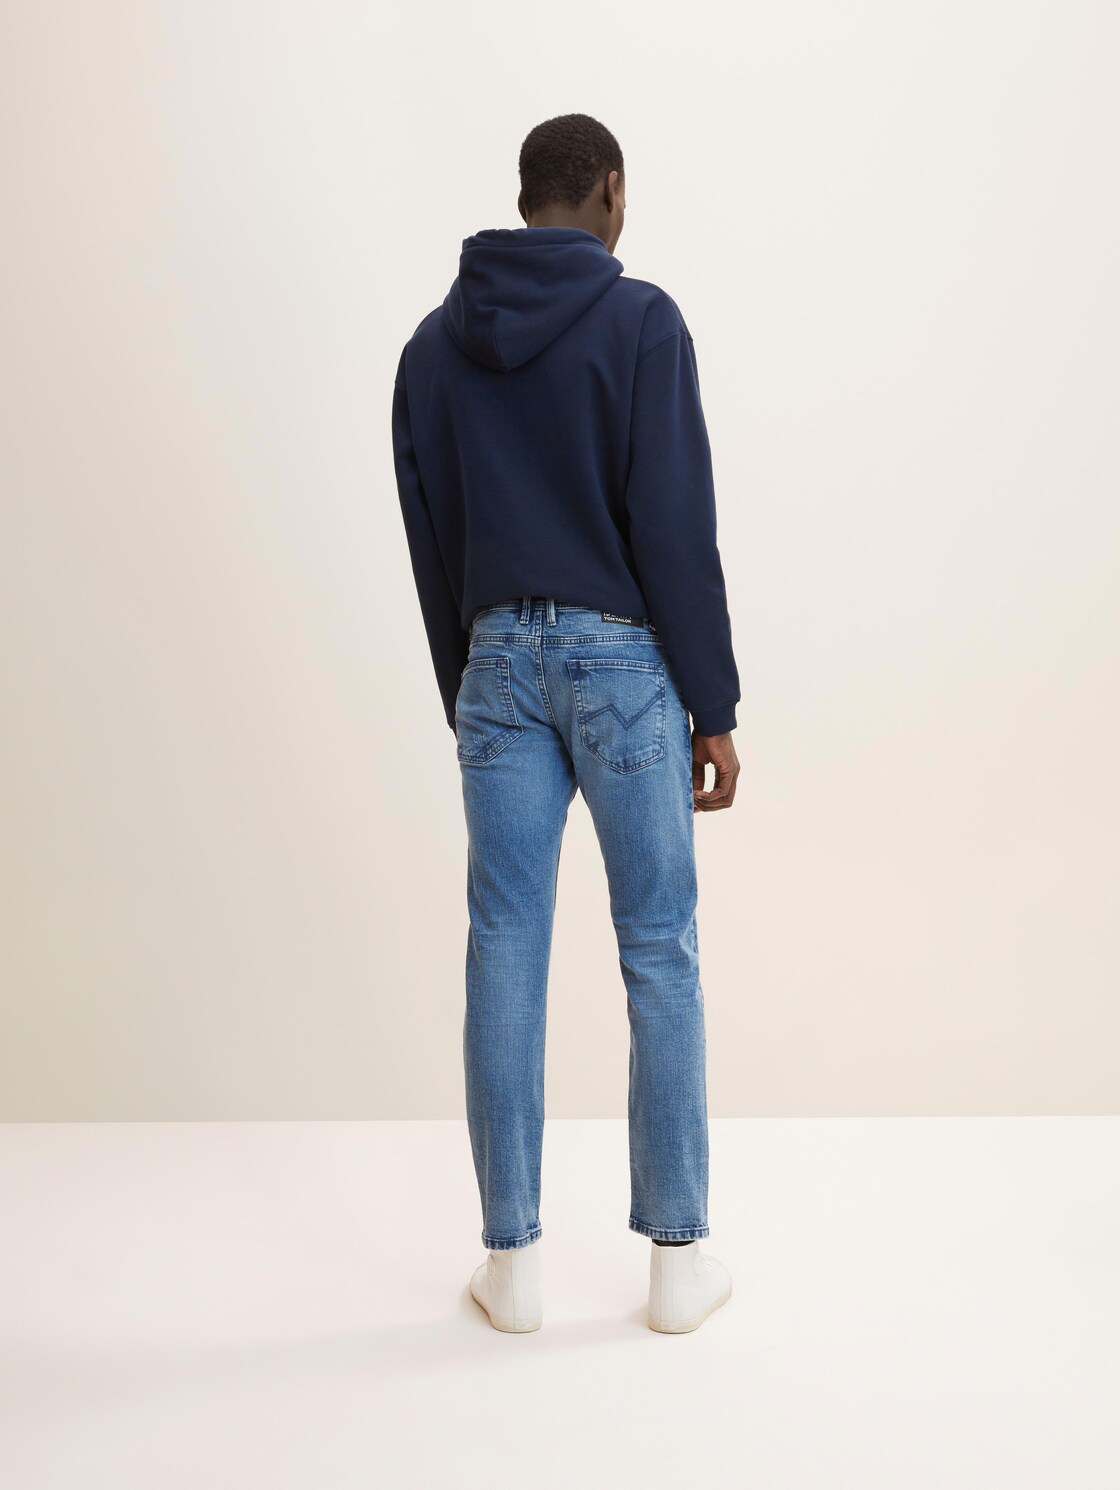 TOM TAILOR DENIM Herren Piers Slim Jeans, blau, Gr. 33/34 3